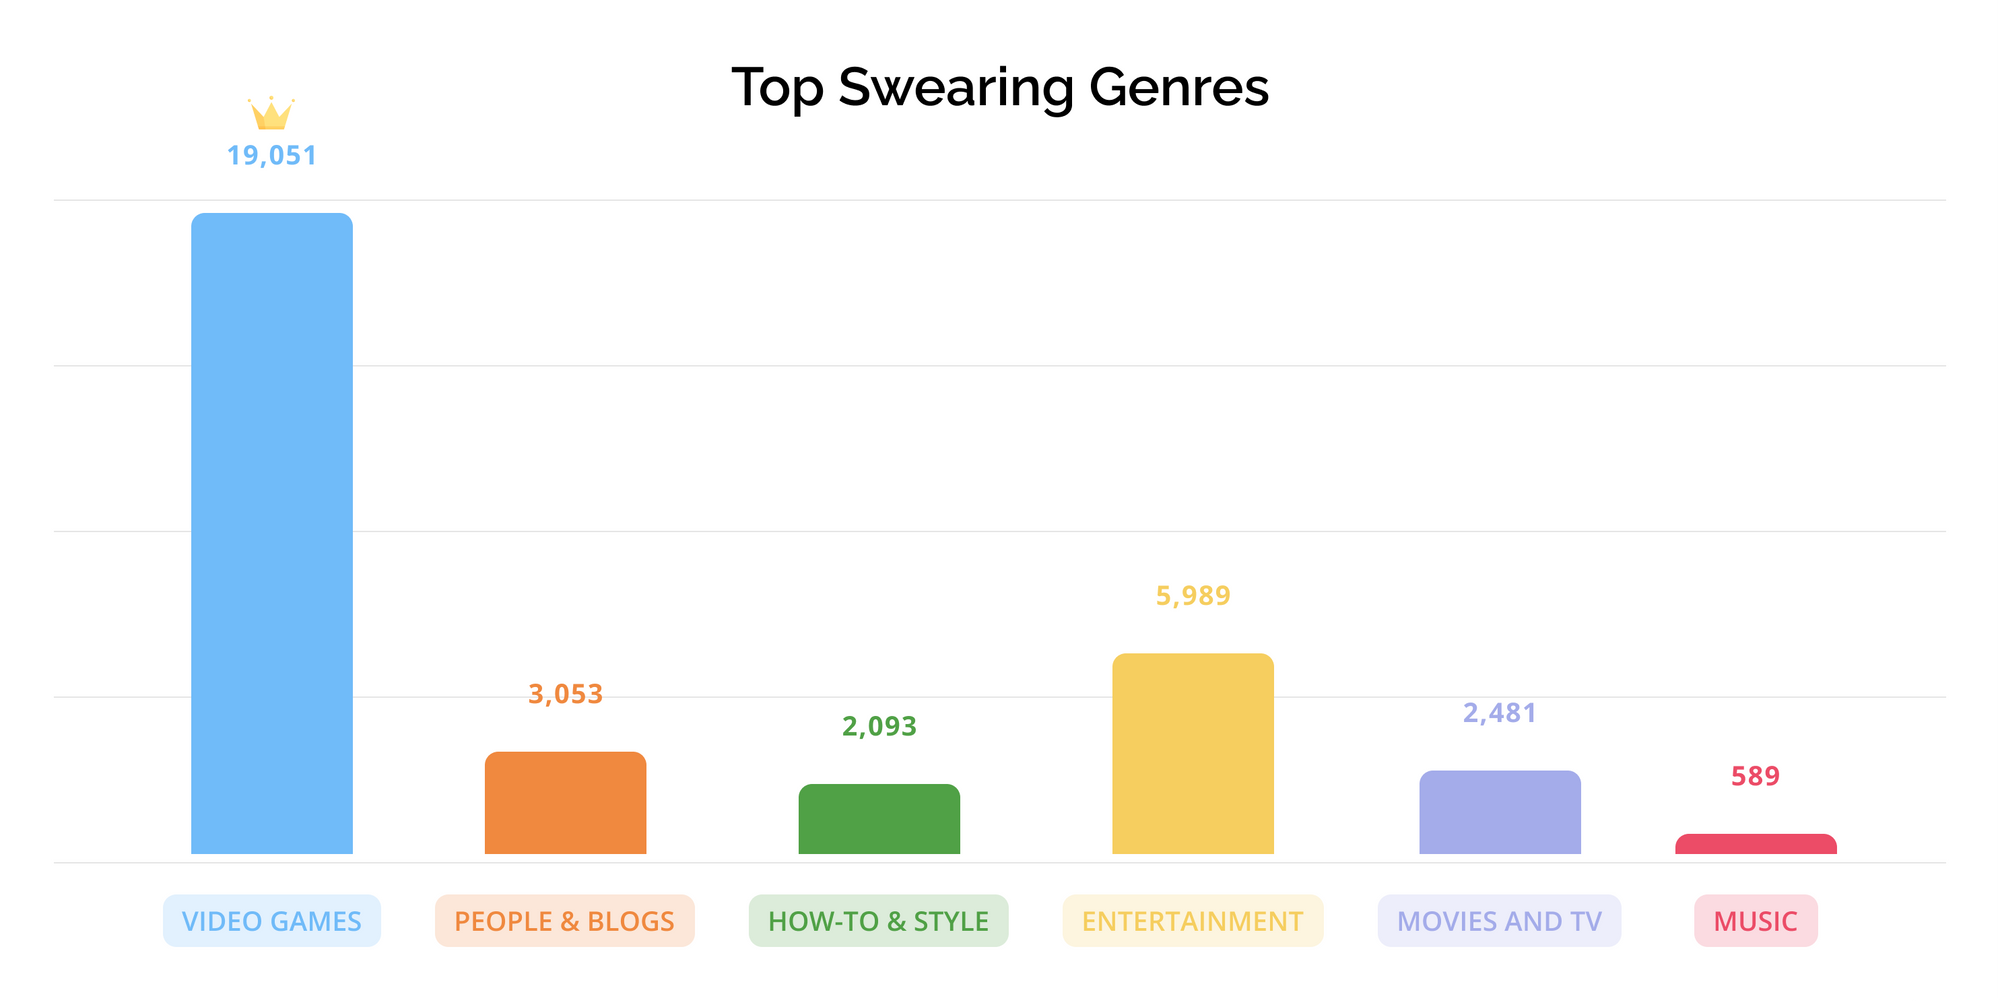 Top Swearing Genres